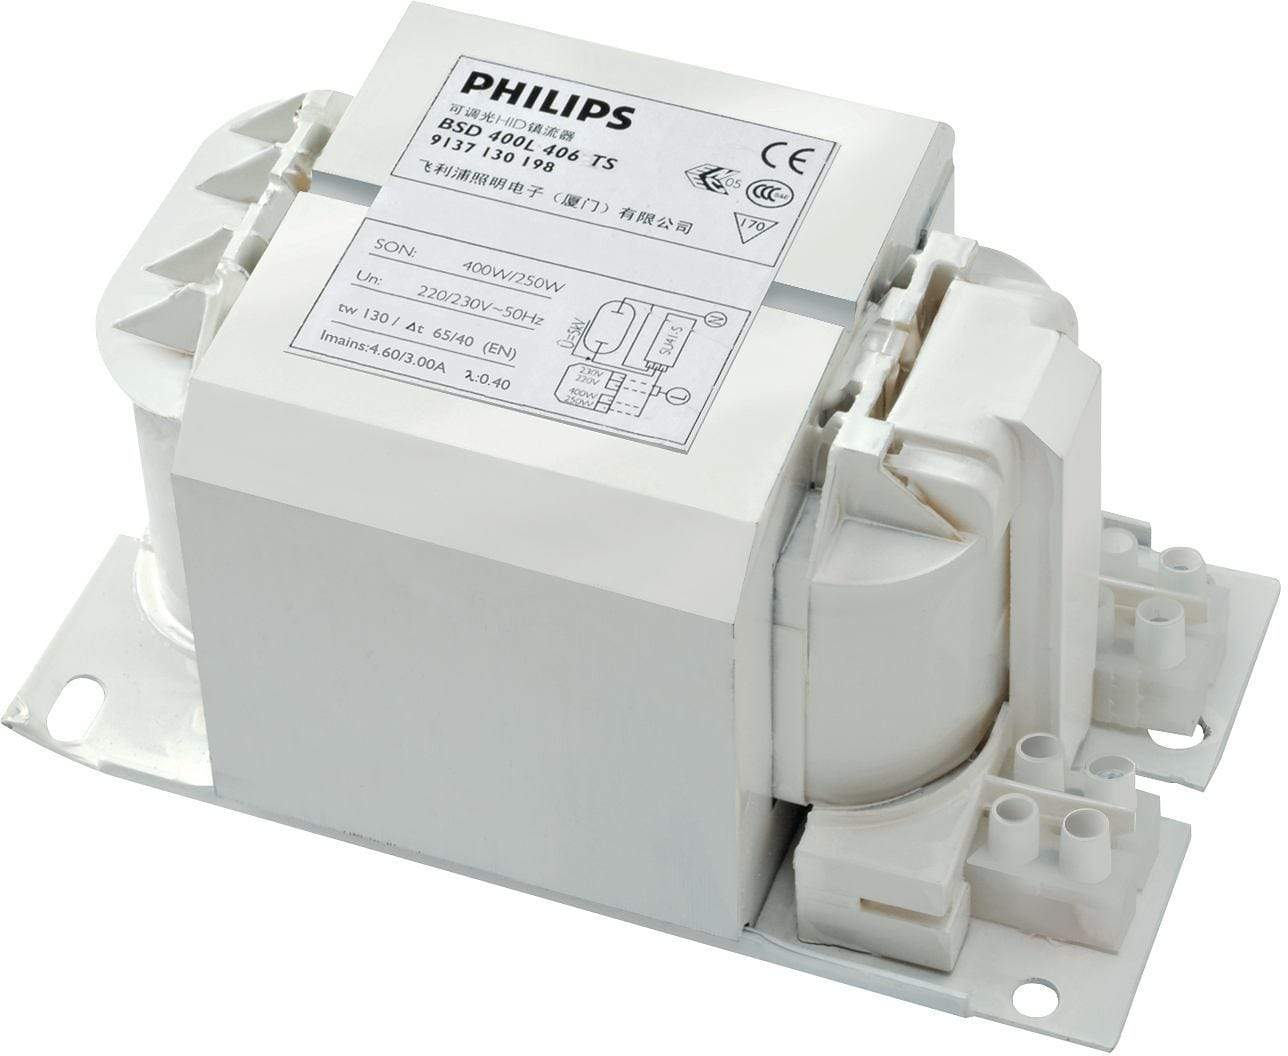 PHILIPS EM Gear For SON Lamp x6PCs - DELIGHT OptoElectronics Pte. Ltd